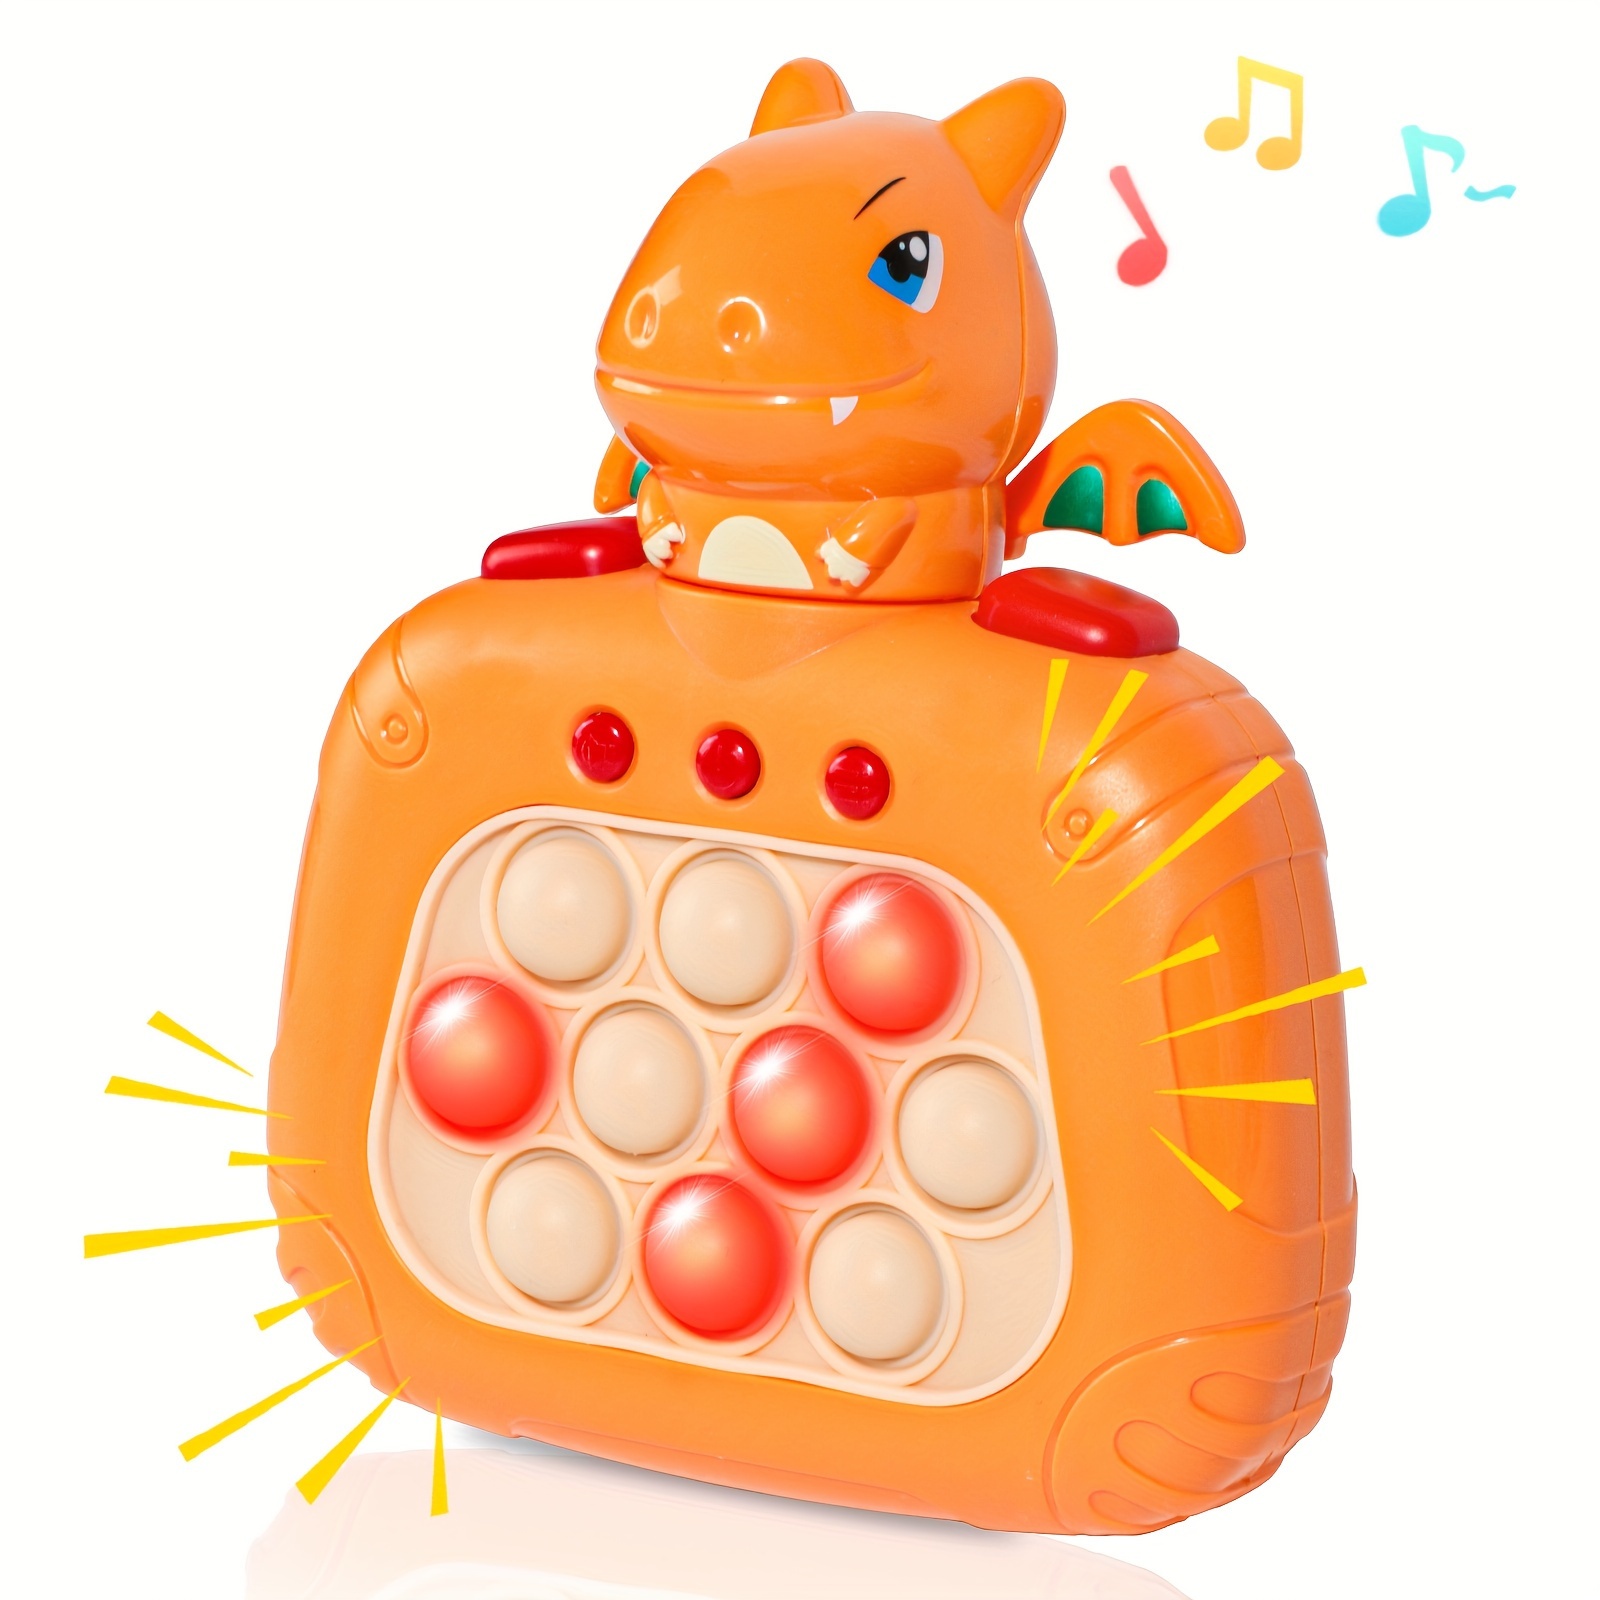 Serie de consolas de juegos Pop Quick Push para niños, interesantes  juguetes para aliviar el estrés de burbujas de empuje, juguetes antiestrés  para